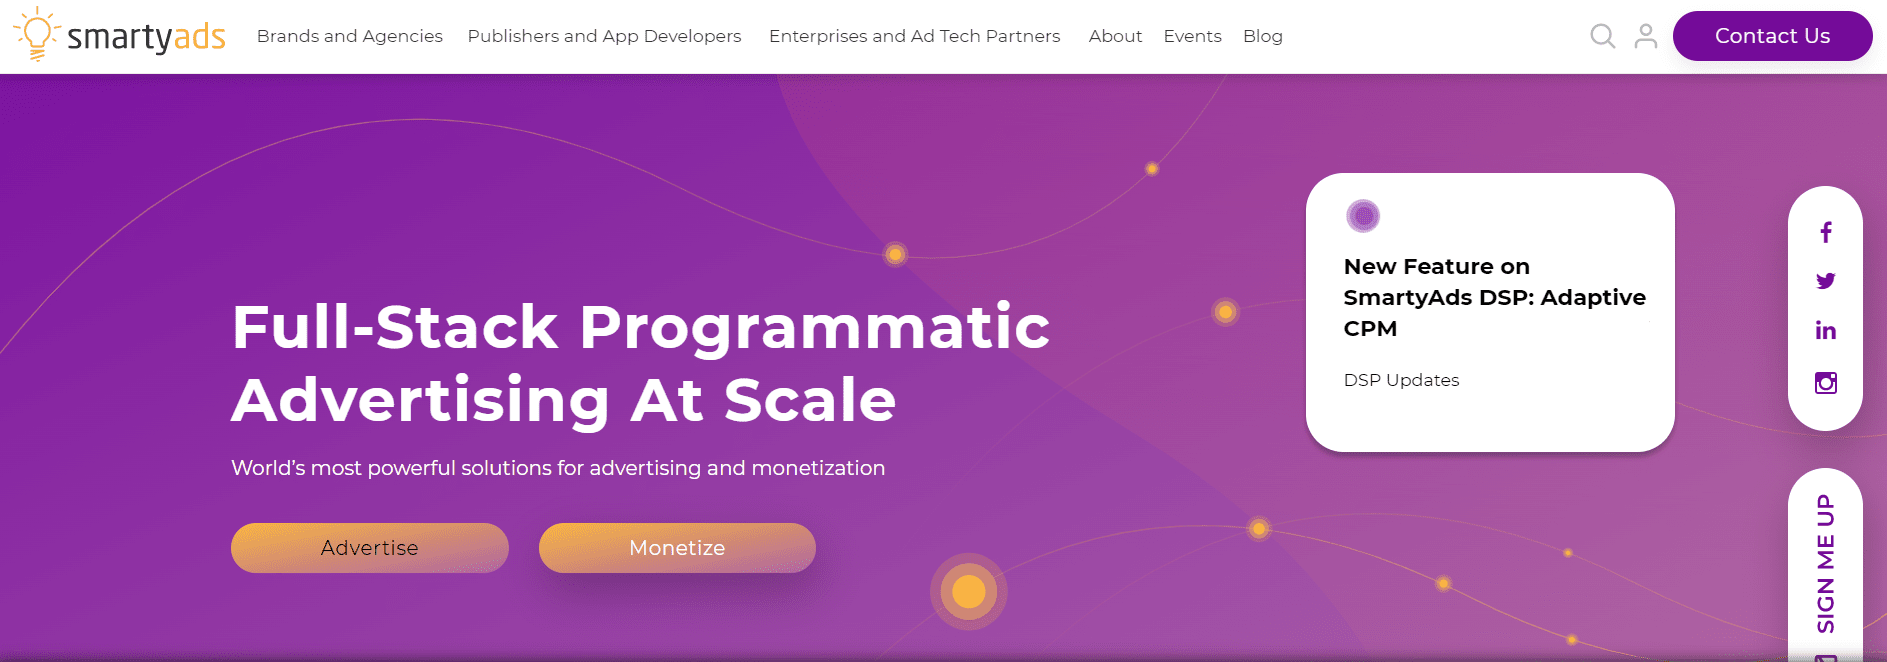 smartyads homepage